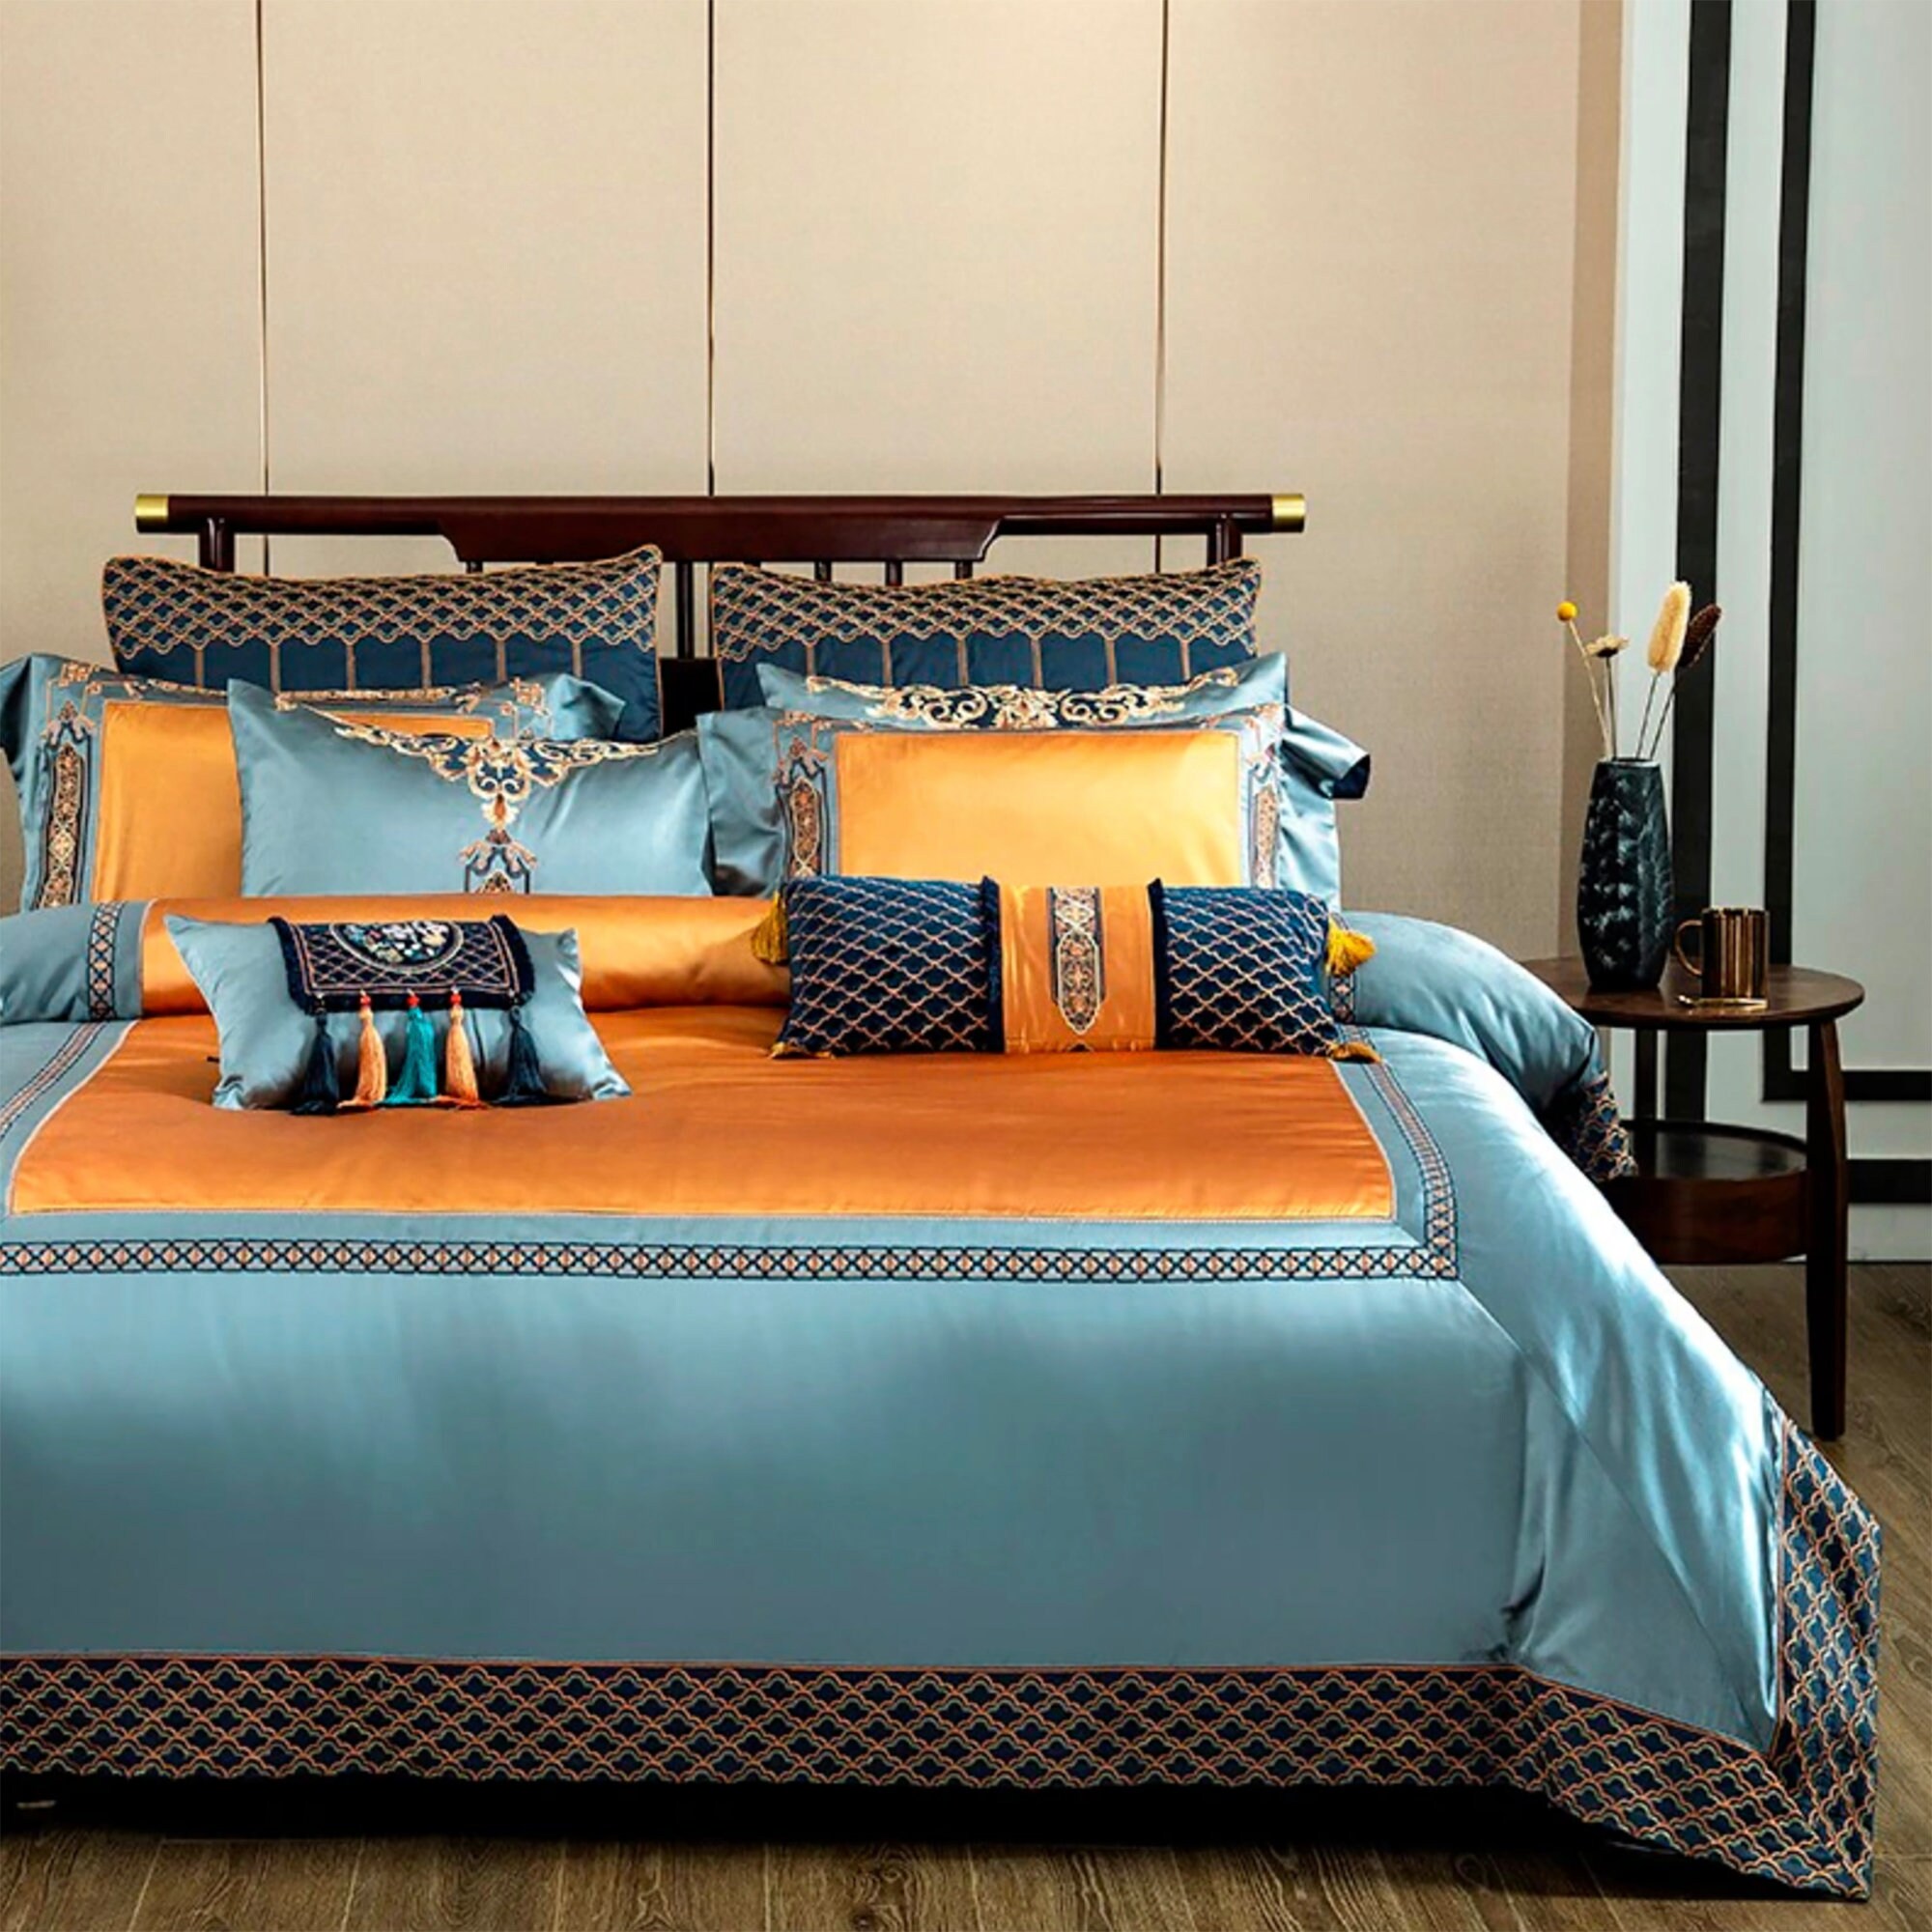 Home Decor Luxury Louis Vuitton Bedding Set - Trends Bedding